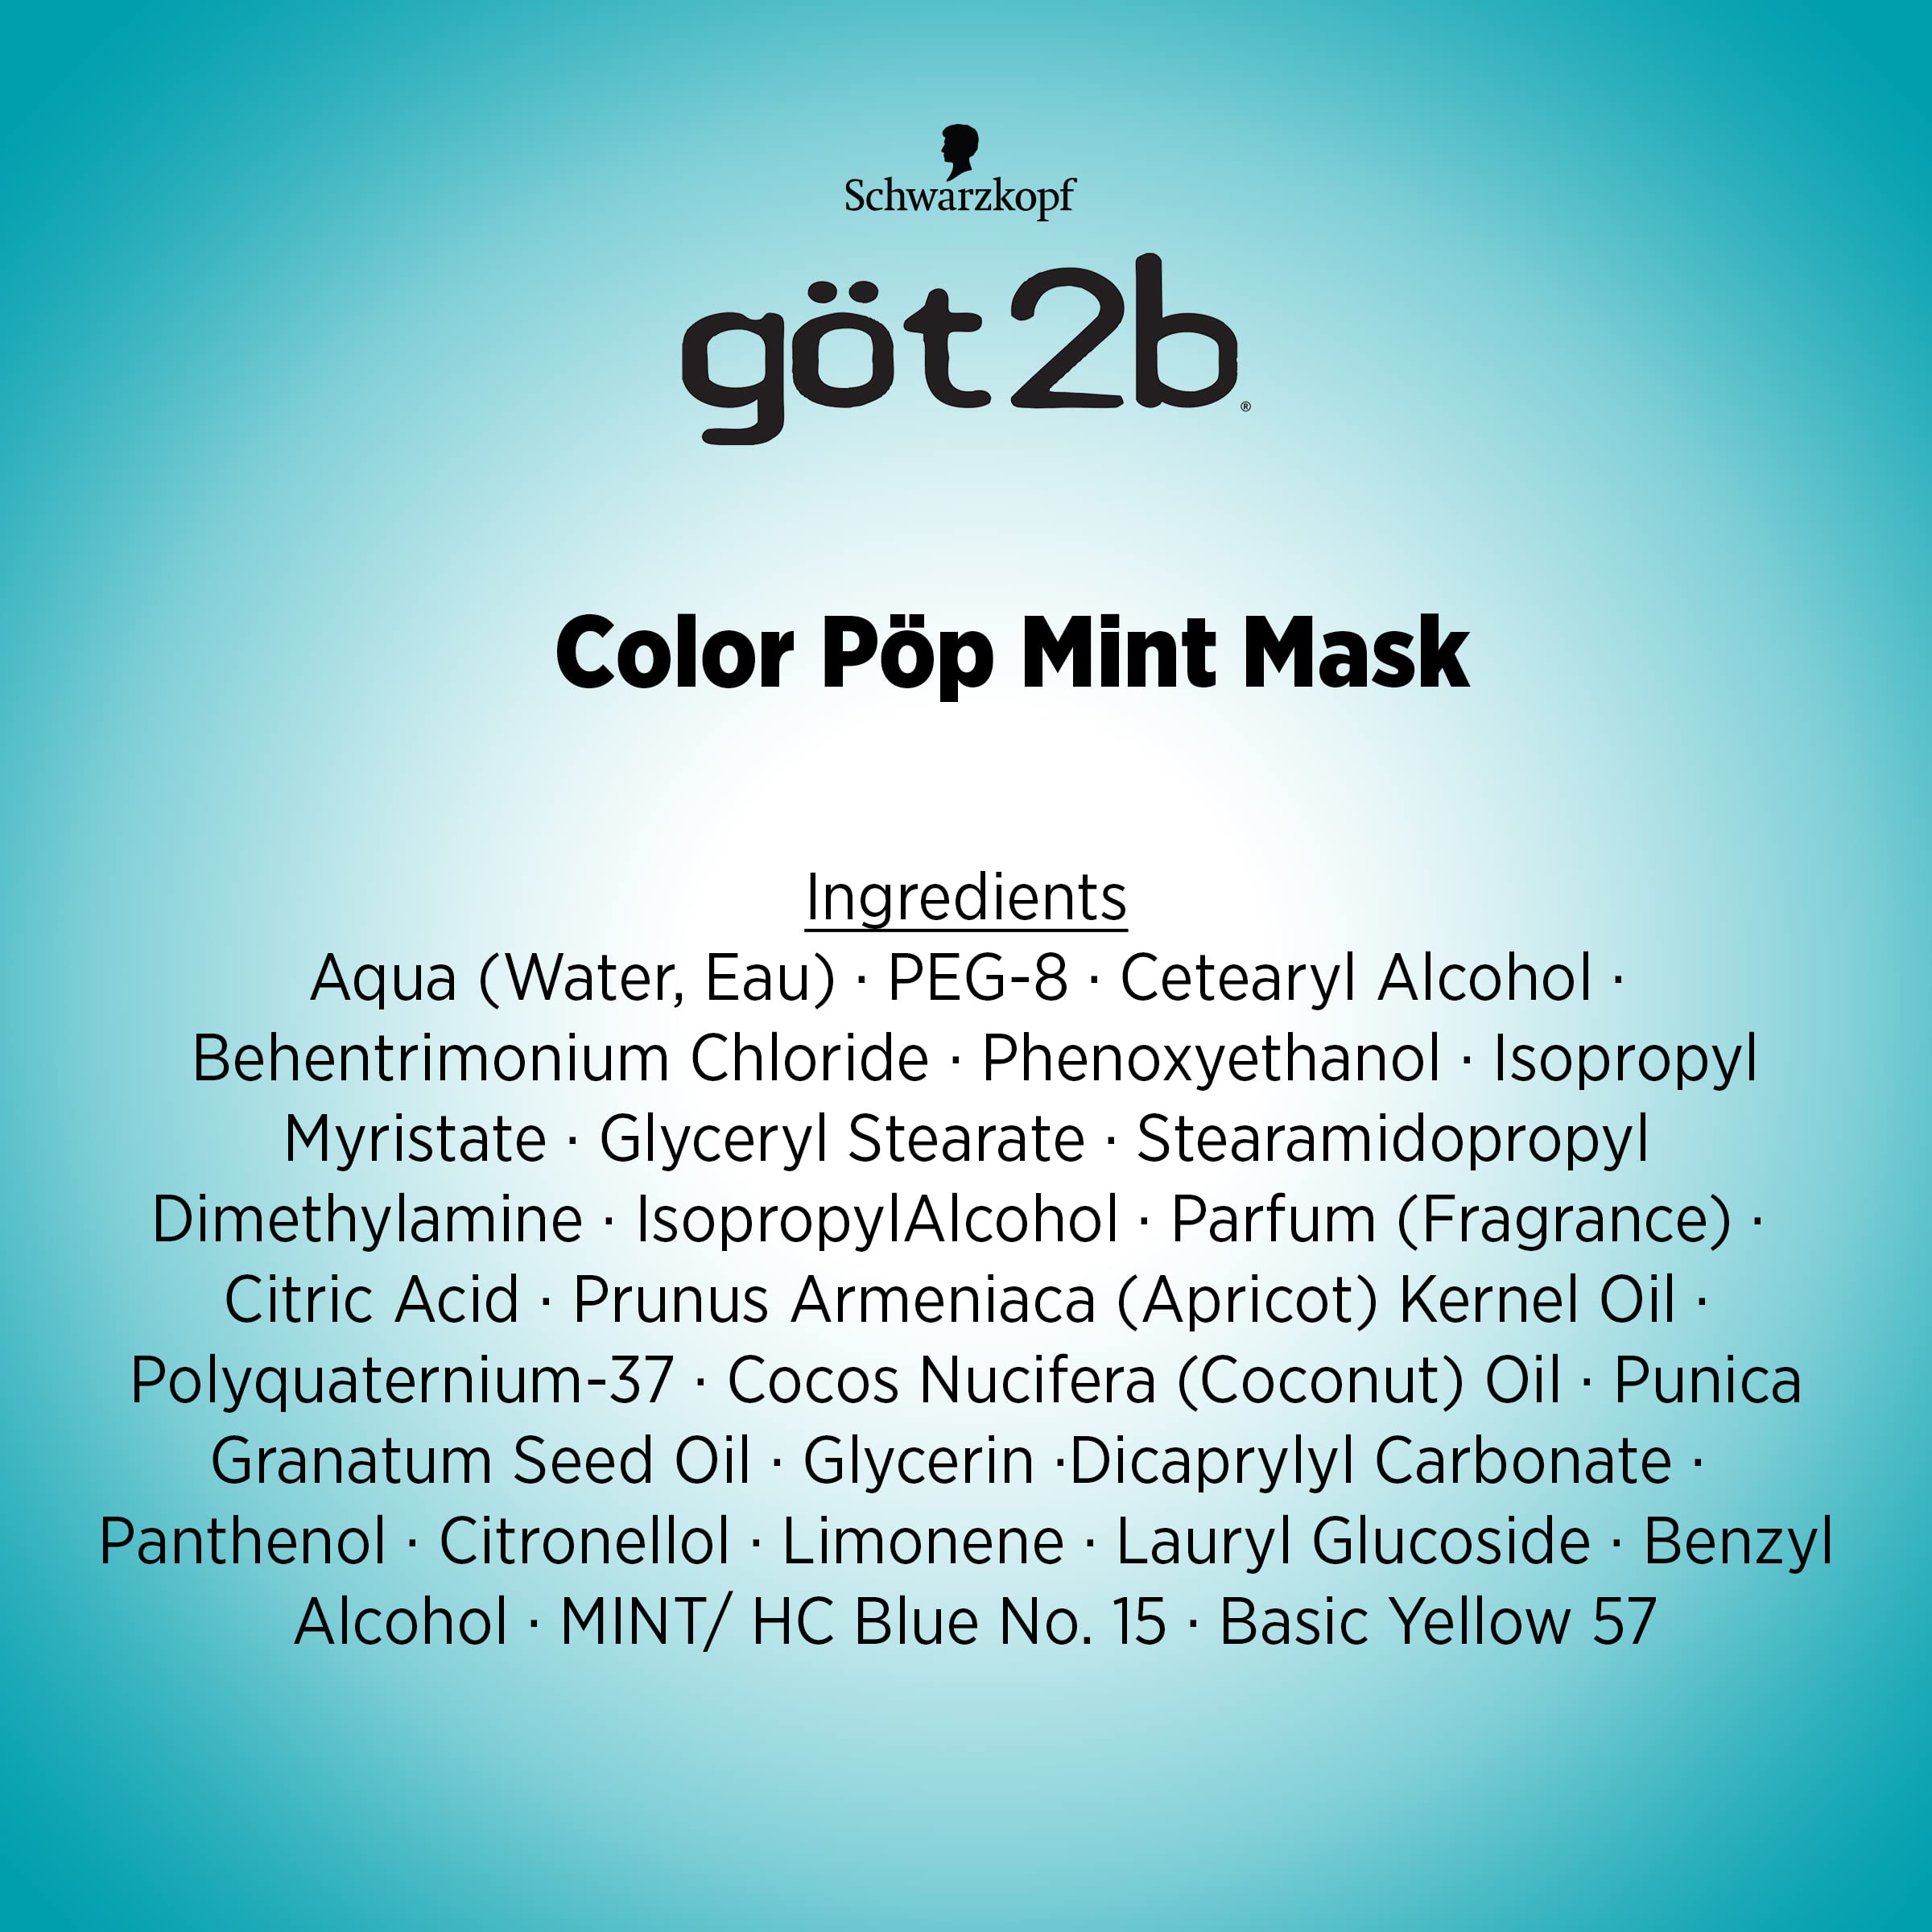 Got2B Color Pop Semi-Permanent Hair Color Mask, Mint, 5.1 oz